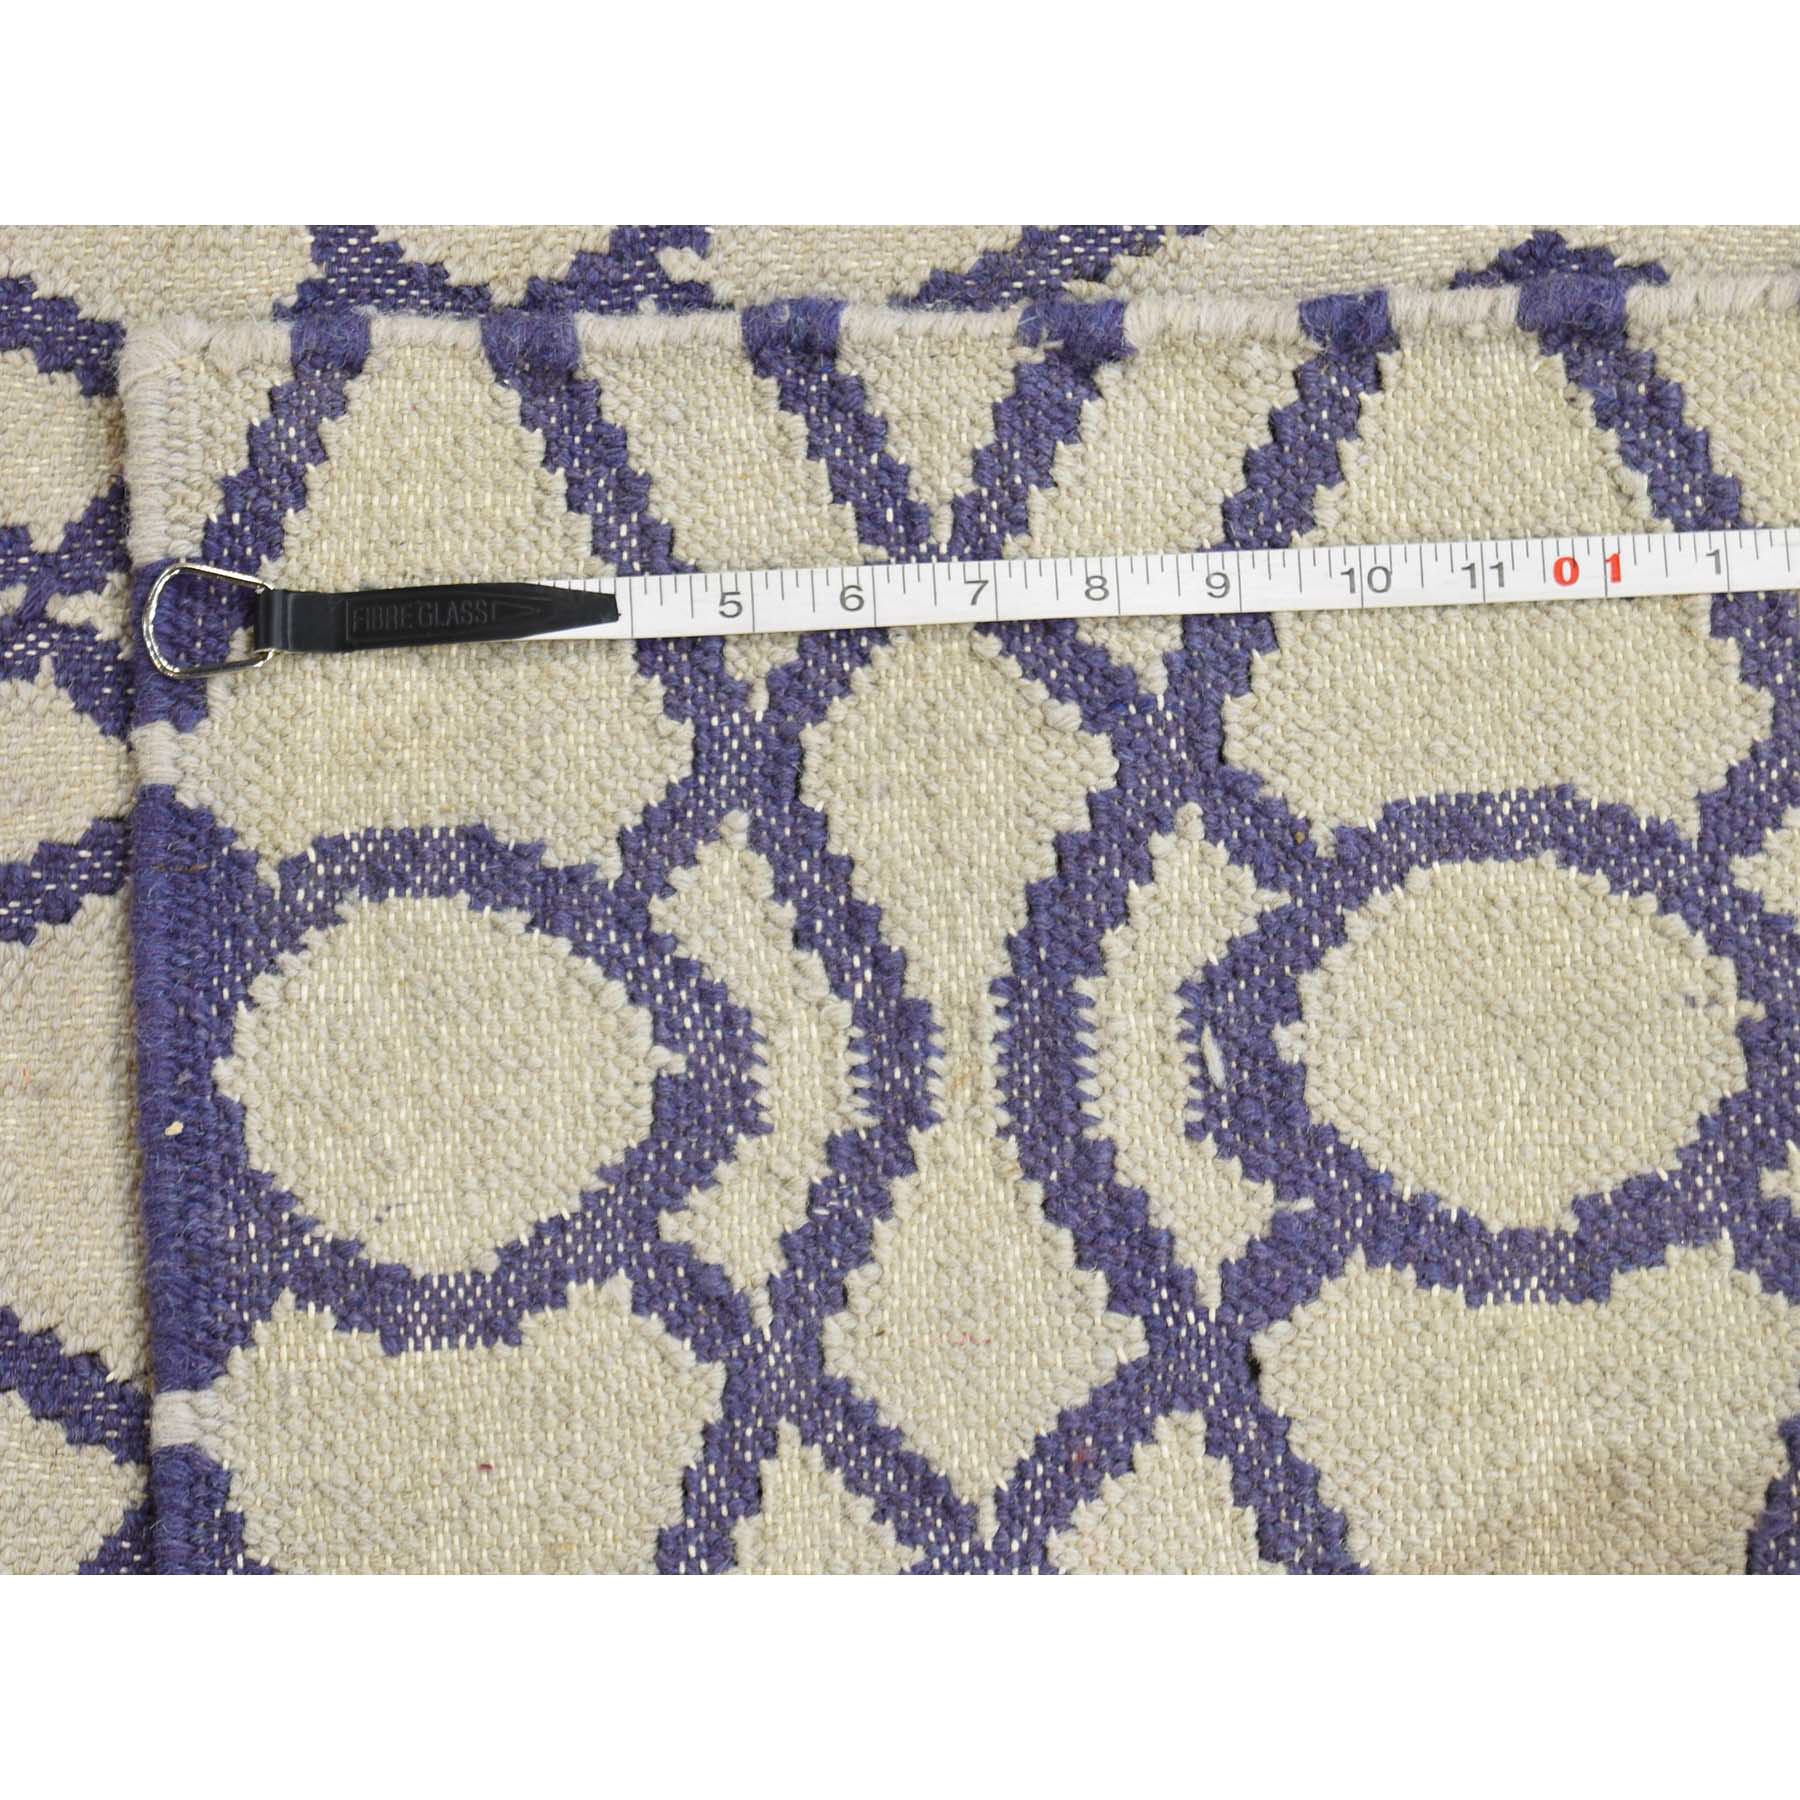 2-10--x7-10-- Hand Woven Flat Weave Reversible Durie Kilim Runner Rug 